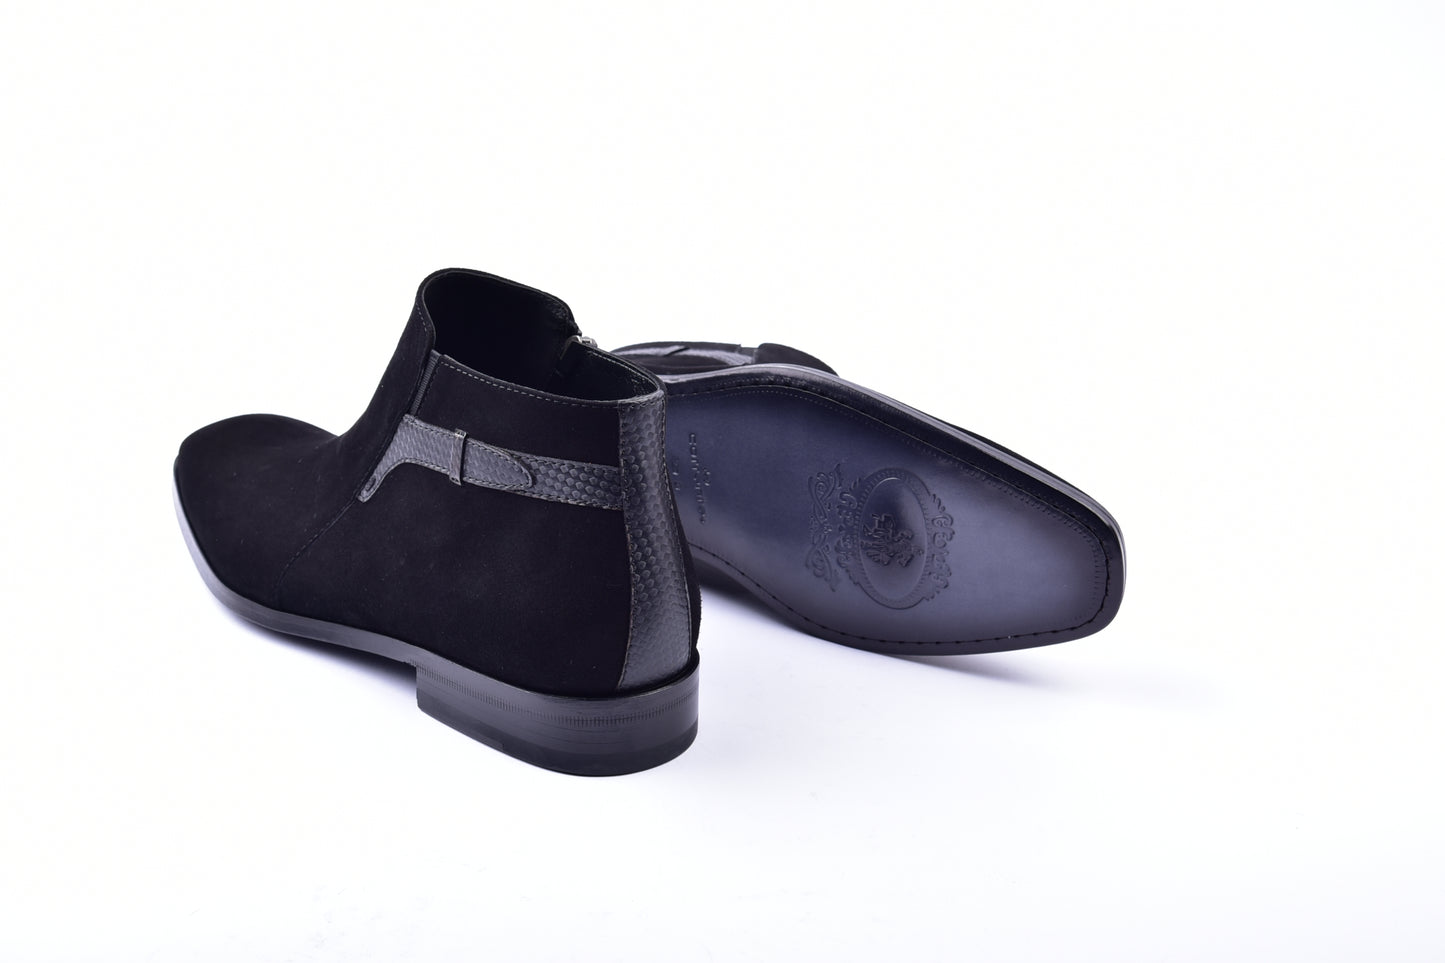 C2041-5361 side zipper boot - Black suede